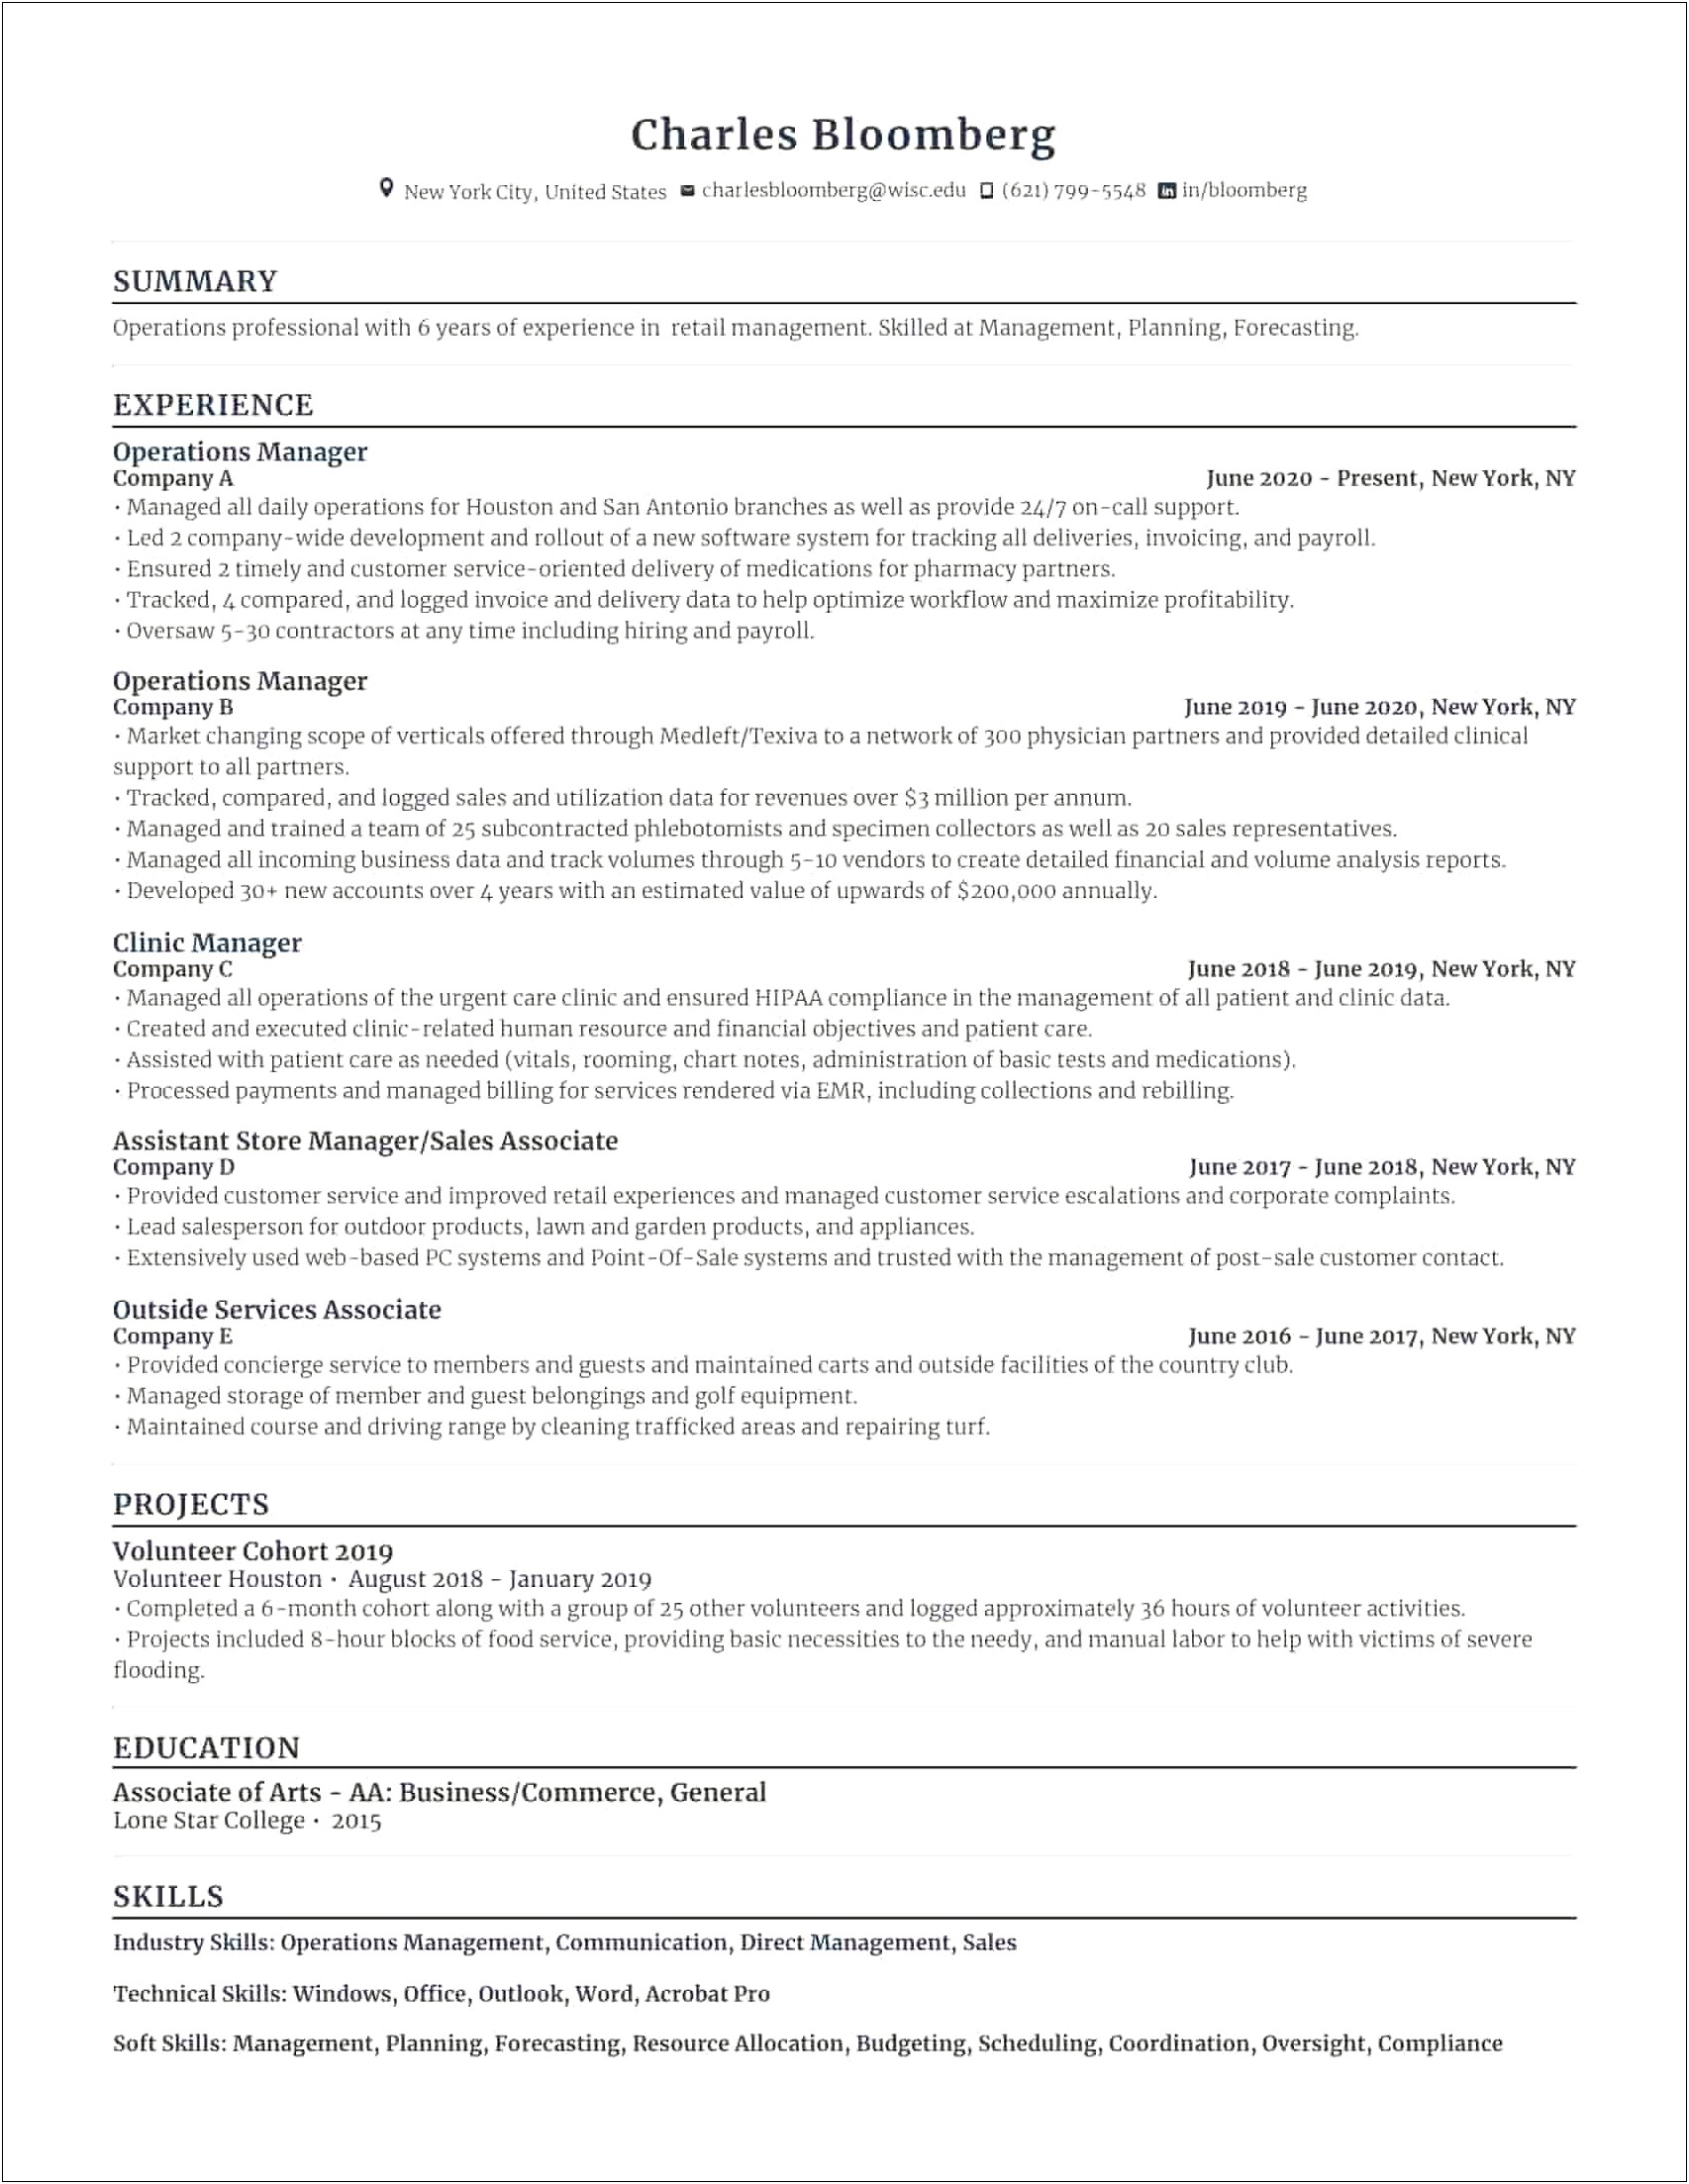 Lawn And Garden Salesperson Job Description Resume